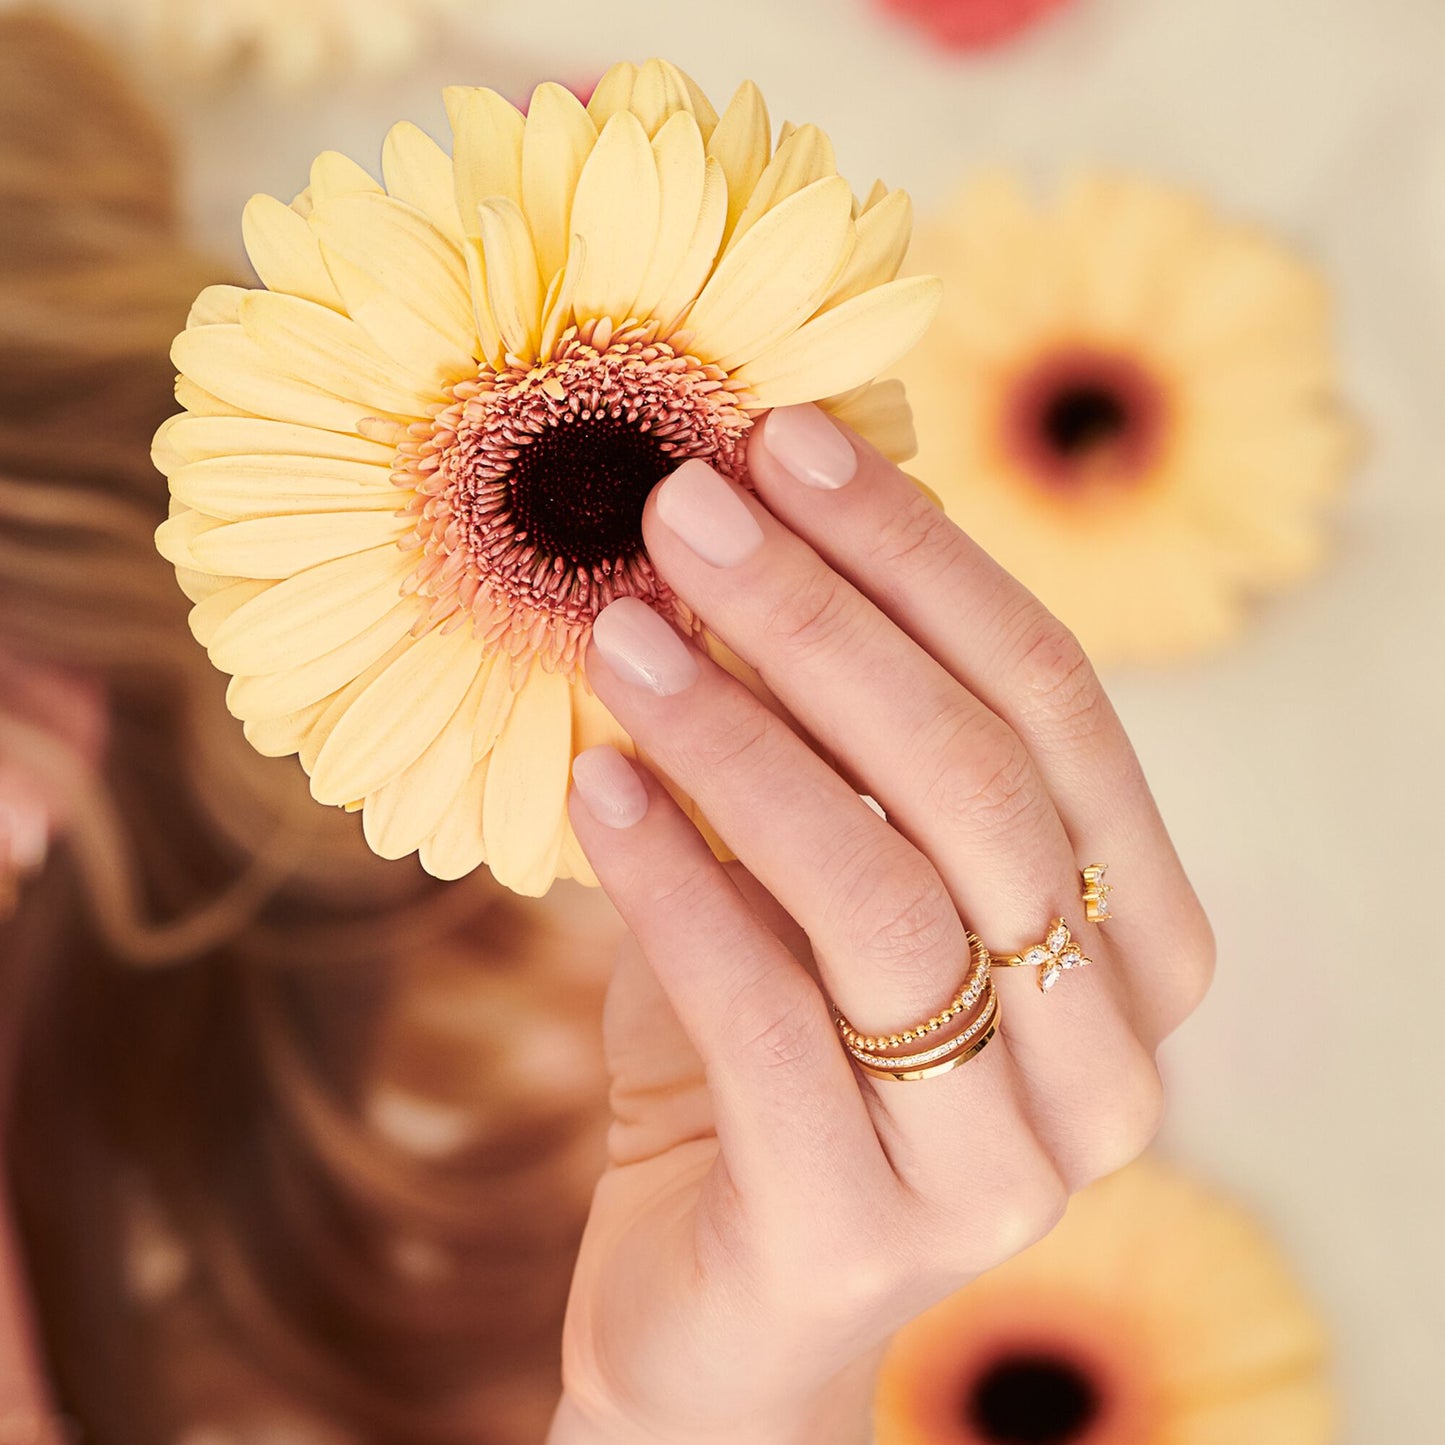 THOMAS SABO - Ring Schmetterling mit Blume Zirkonia in silber vergoldet